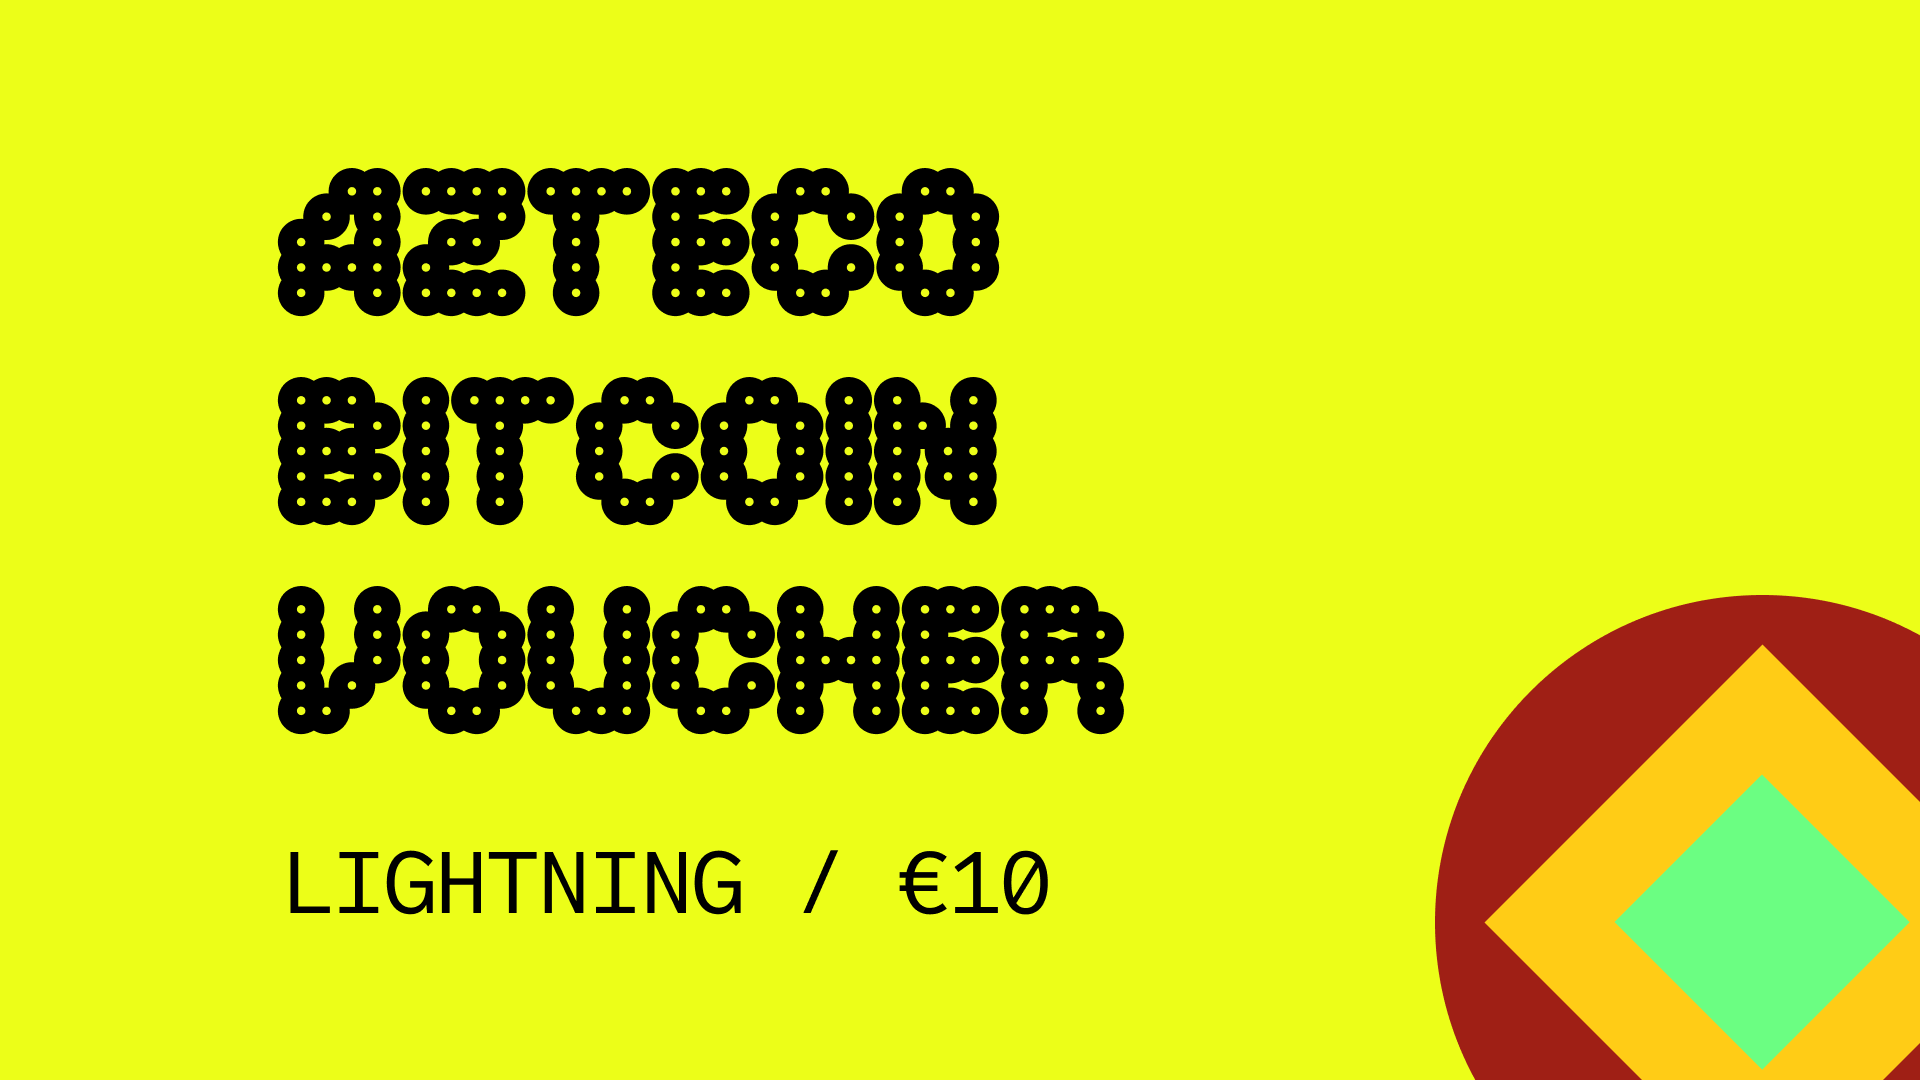 Azteco Bitcoin Lighting €10 Voucher $11.3